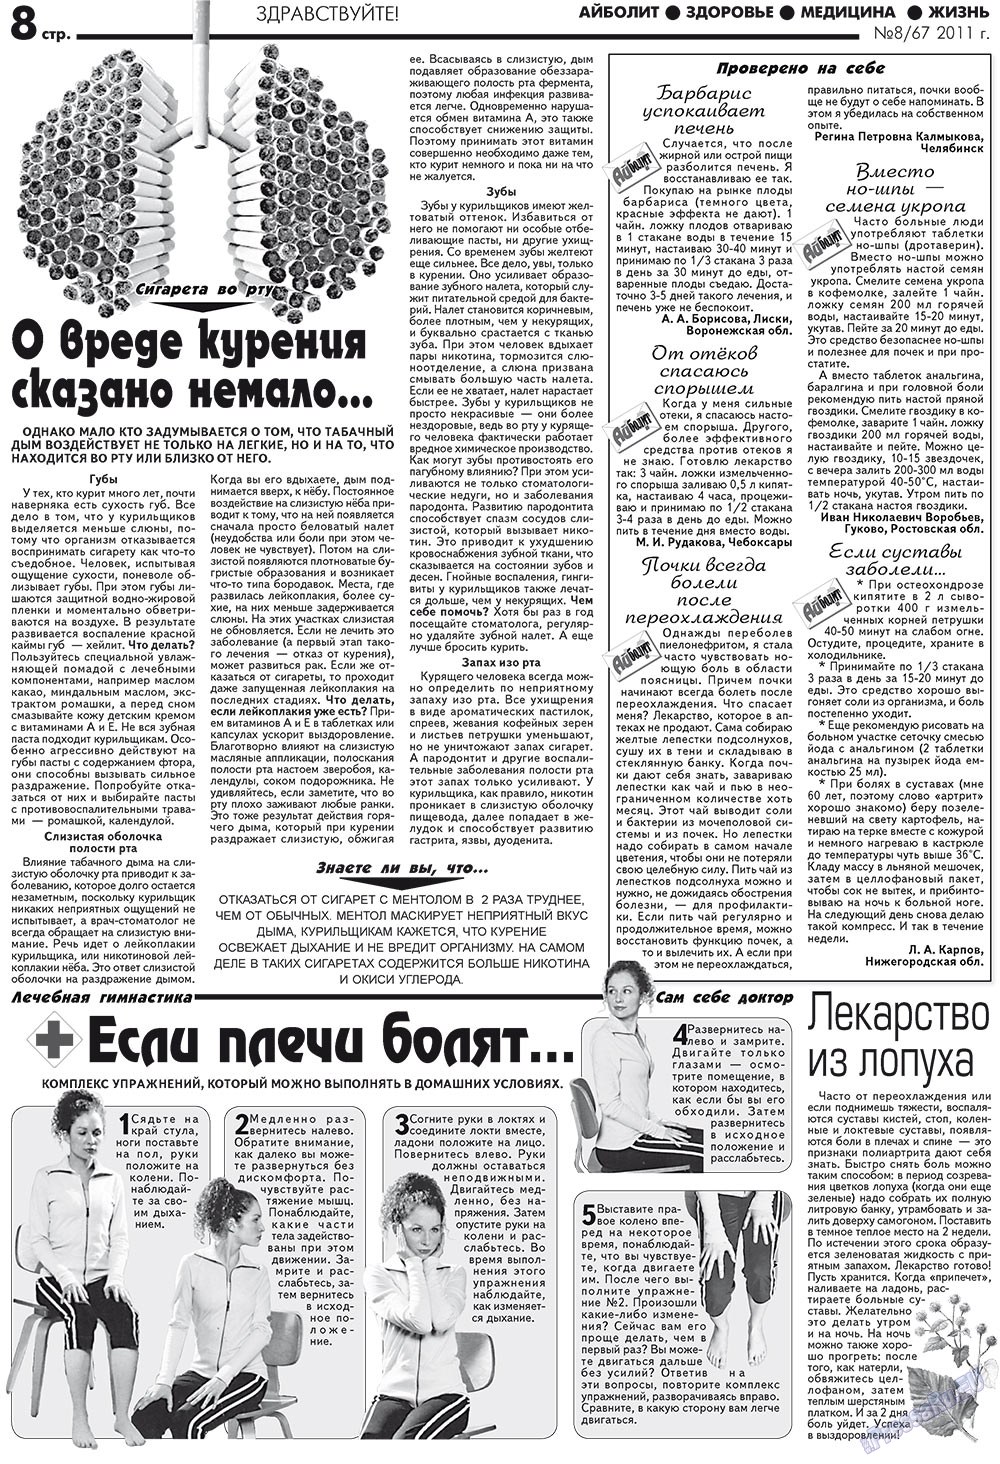 АйБолит (газета). 2011 год, номер 8, стр. 8